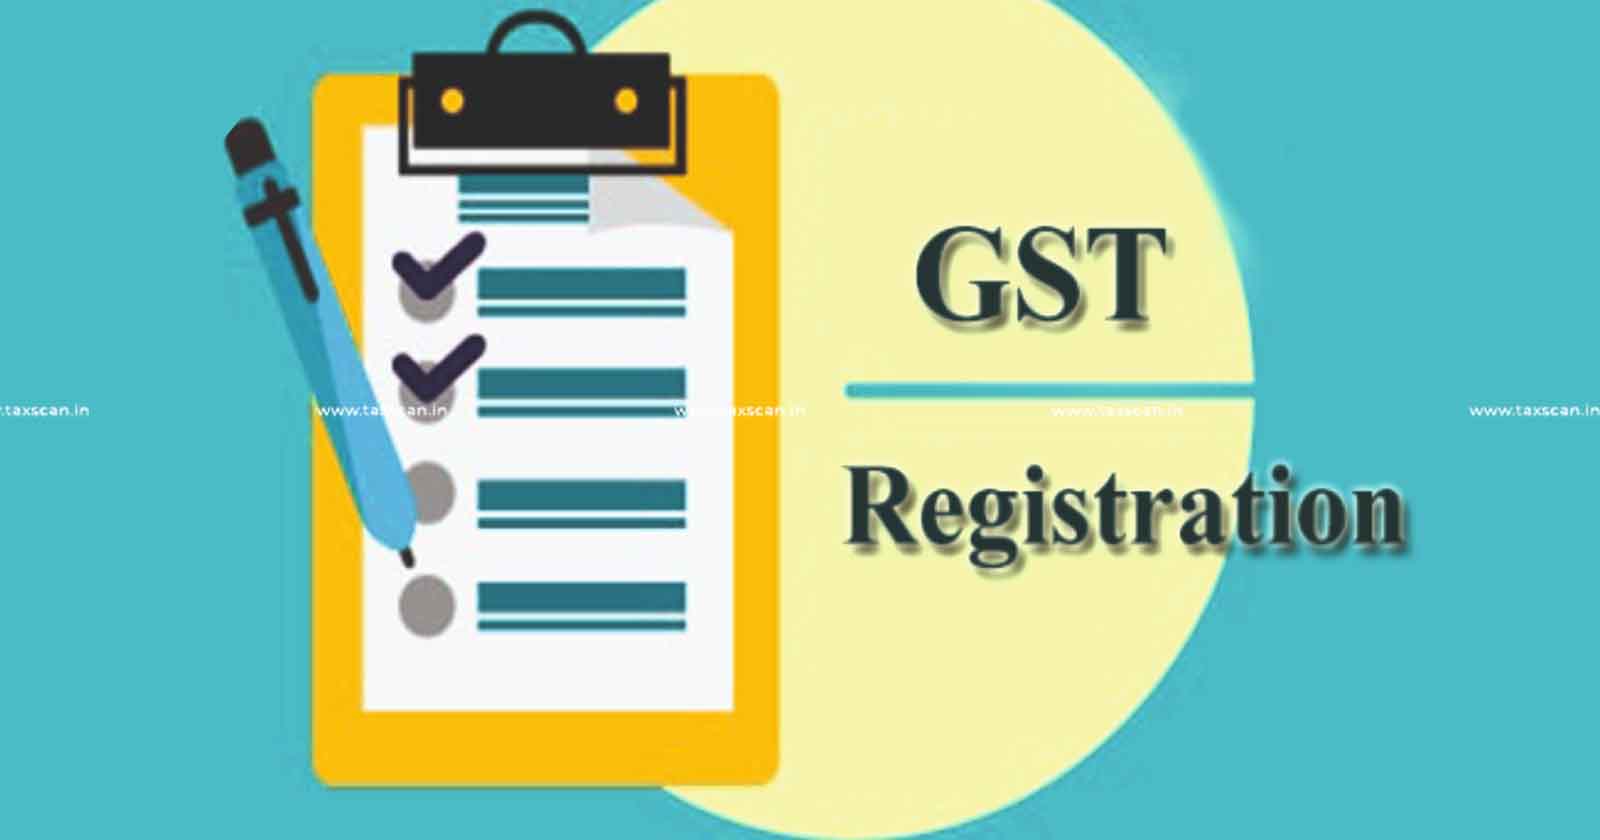 Customs Broker - GST Registration - Government Website - CESTAT - Revocation of Customs Broker Licence - taxscan